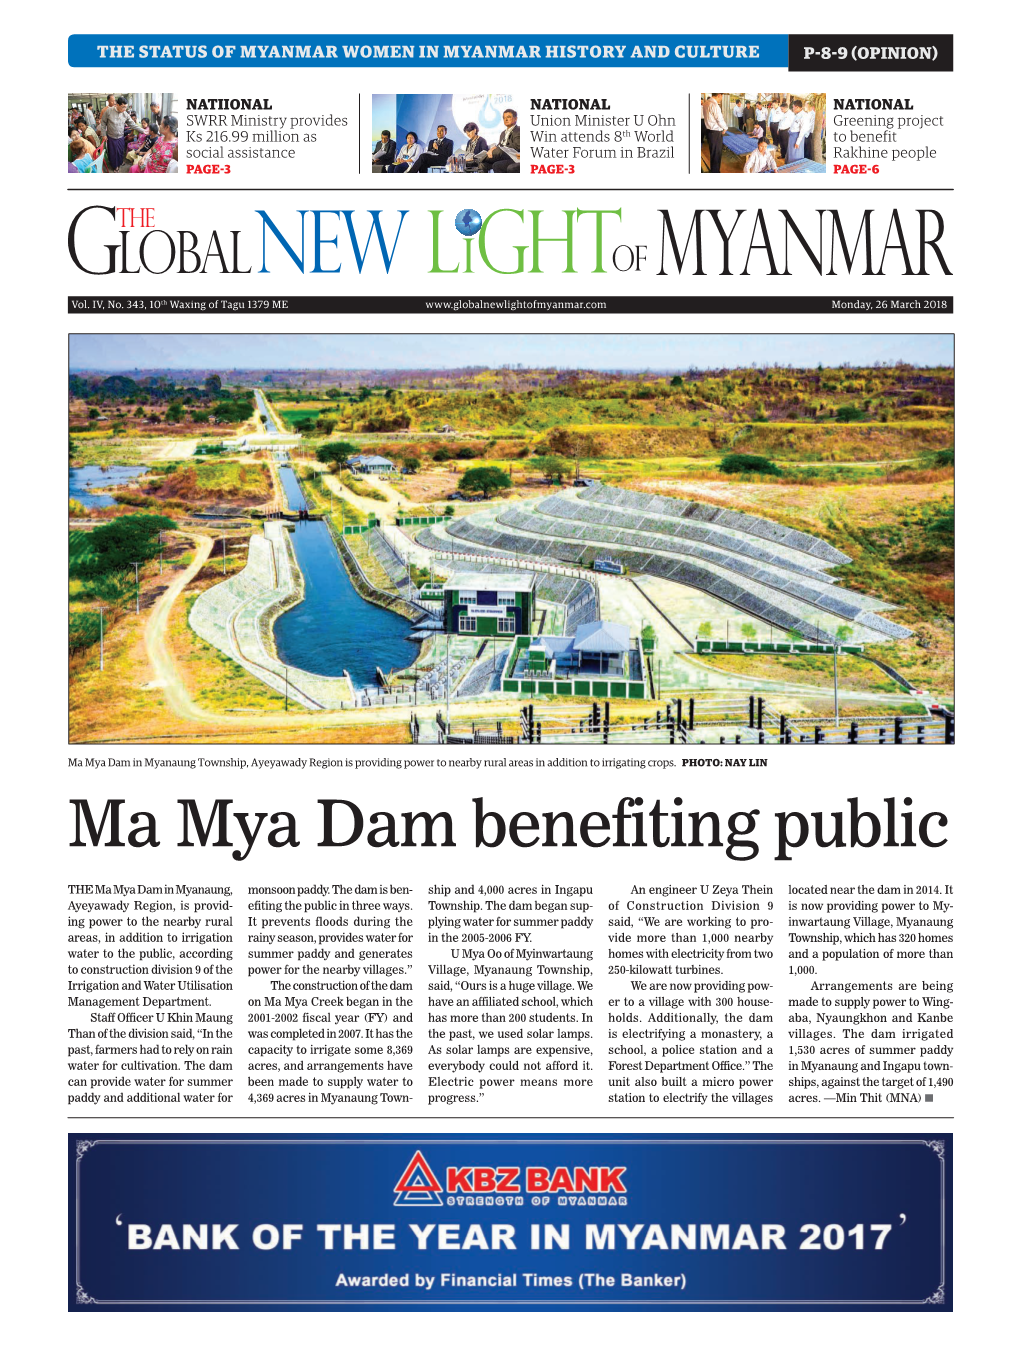 Ma Mya Dam Benefiting Public